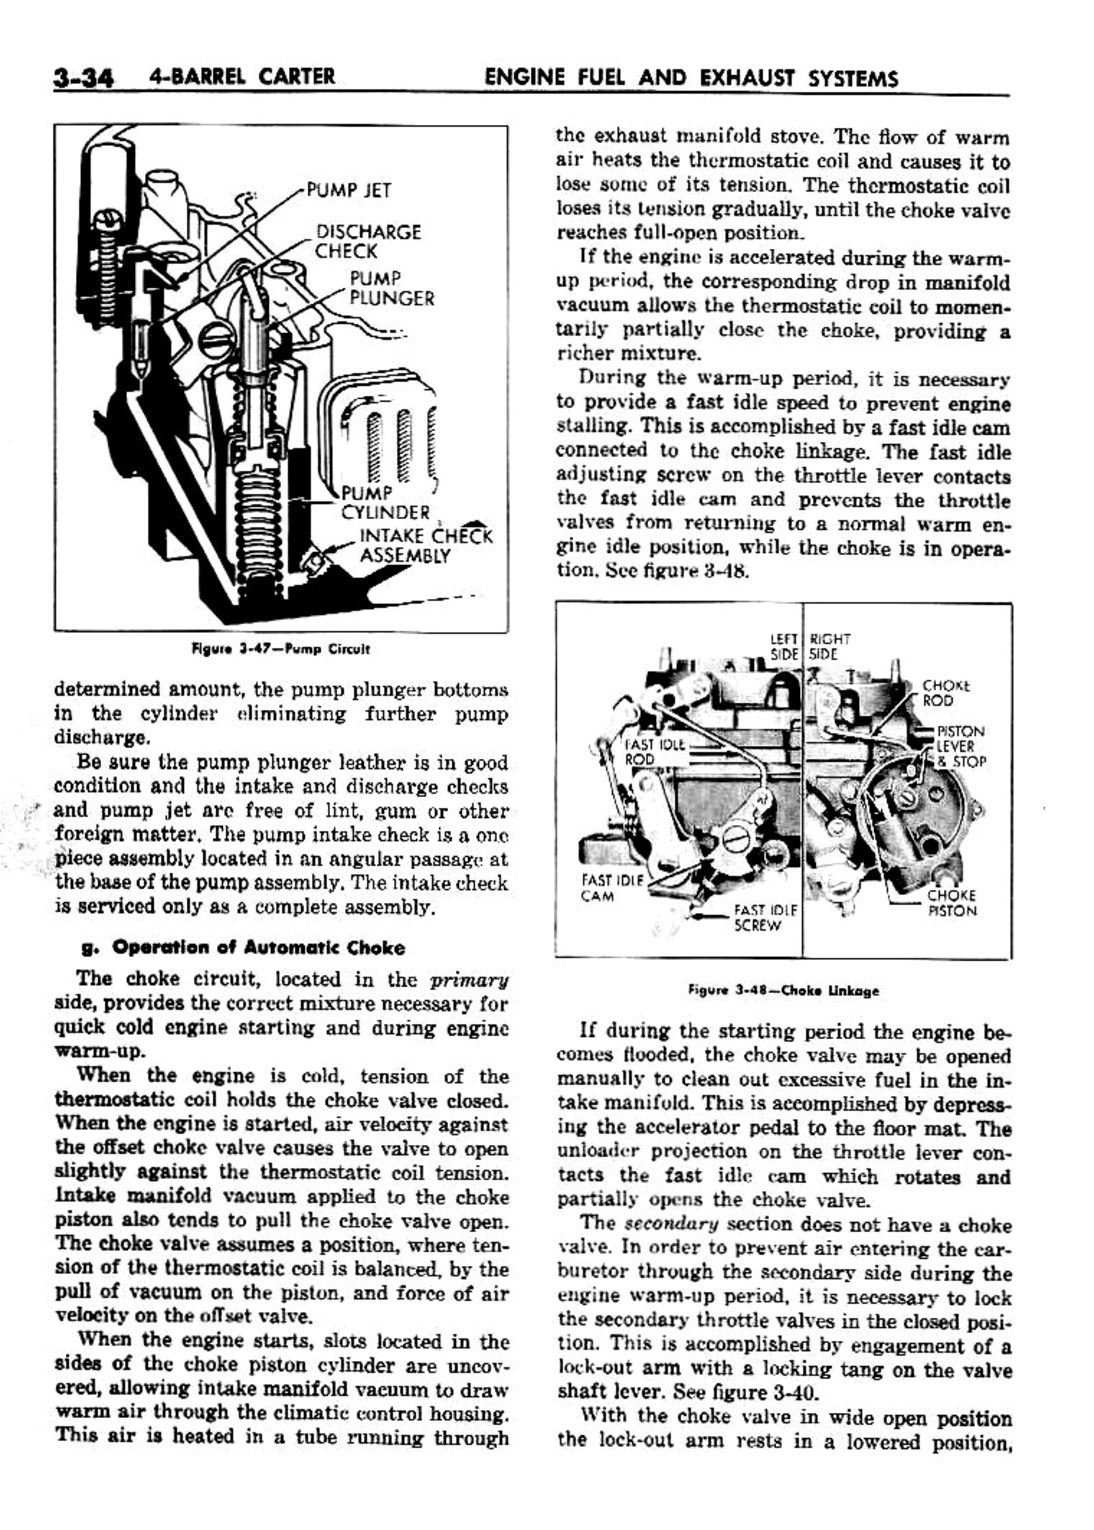 n_04 1959 Buick Shop Manual - Engine Fuel & Exhaust-034-034.jpg